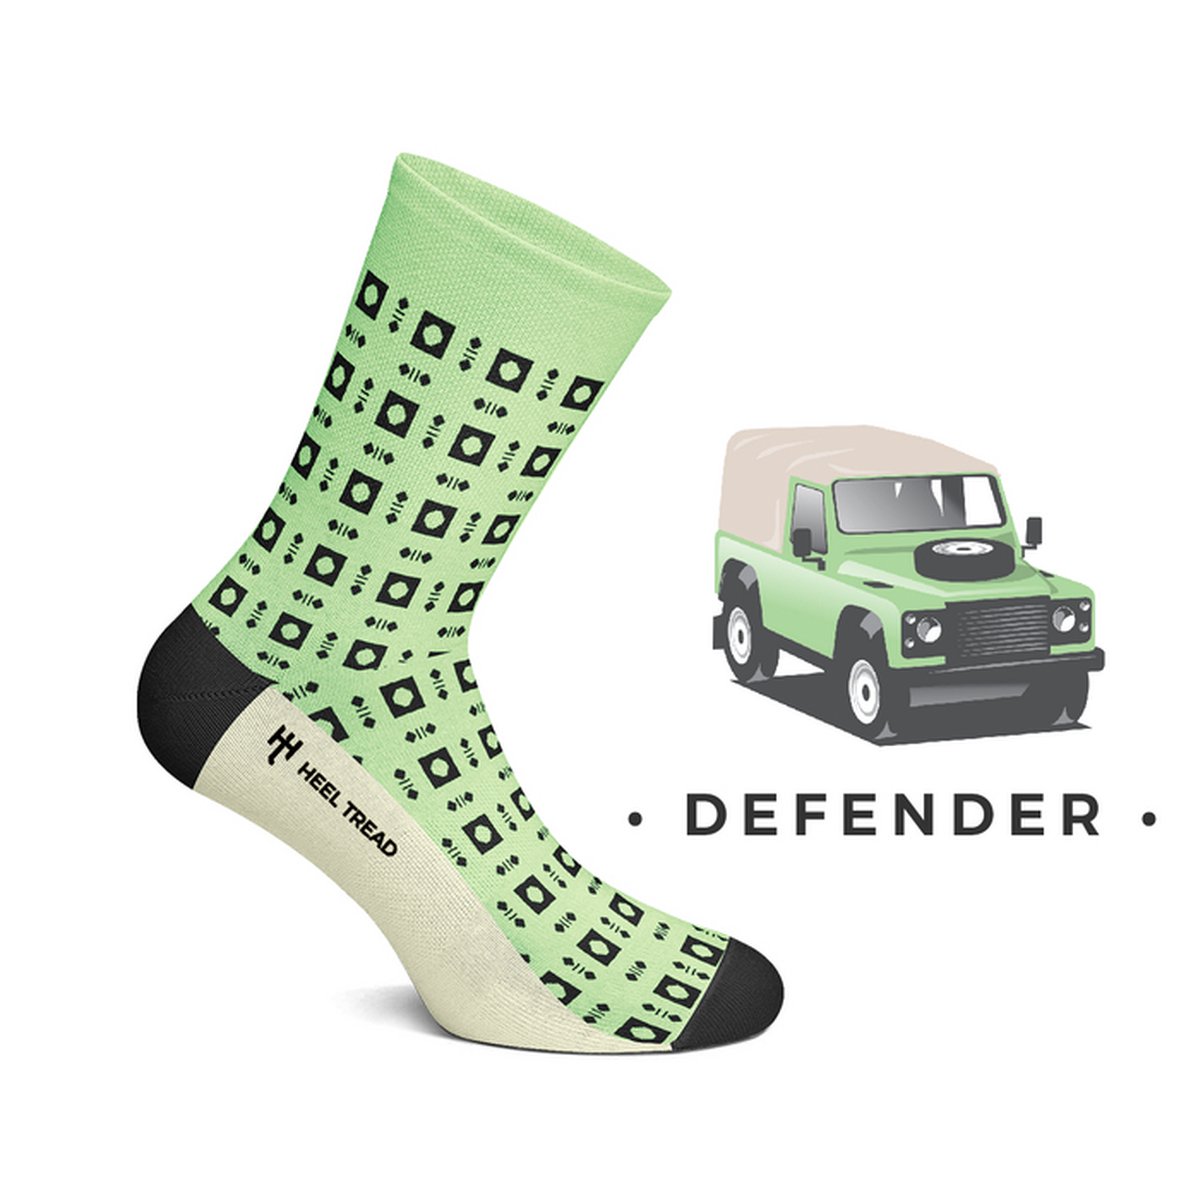 Heel Tread Defender sokken - Land Rover Defender sokken - 4x4 sokken - fun sokken - Auto sokken - Maat 41-46